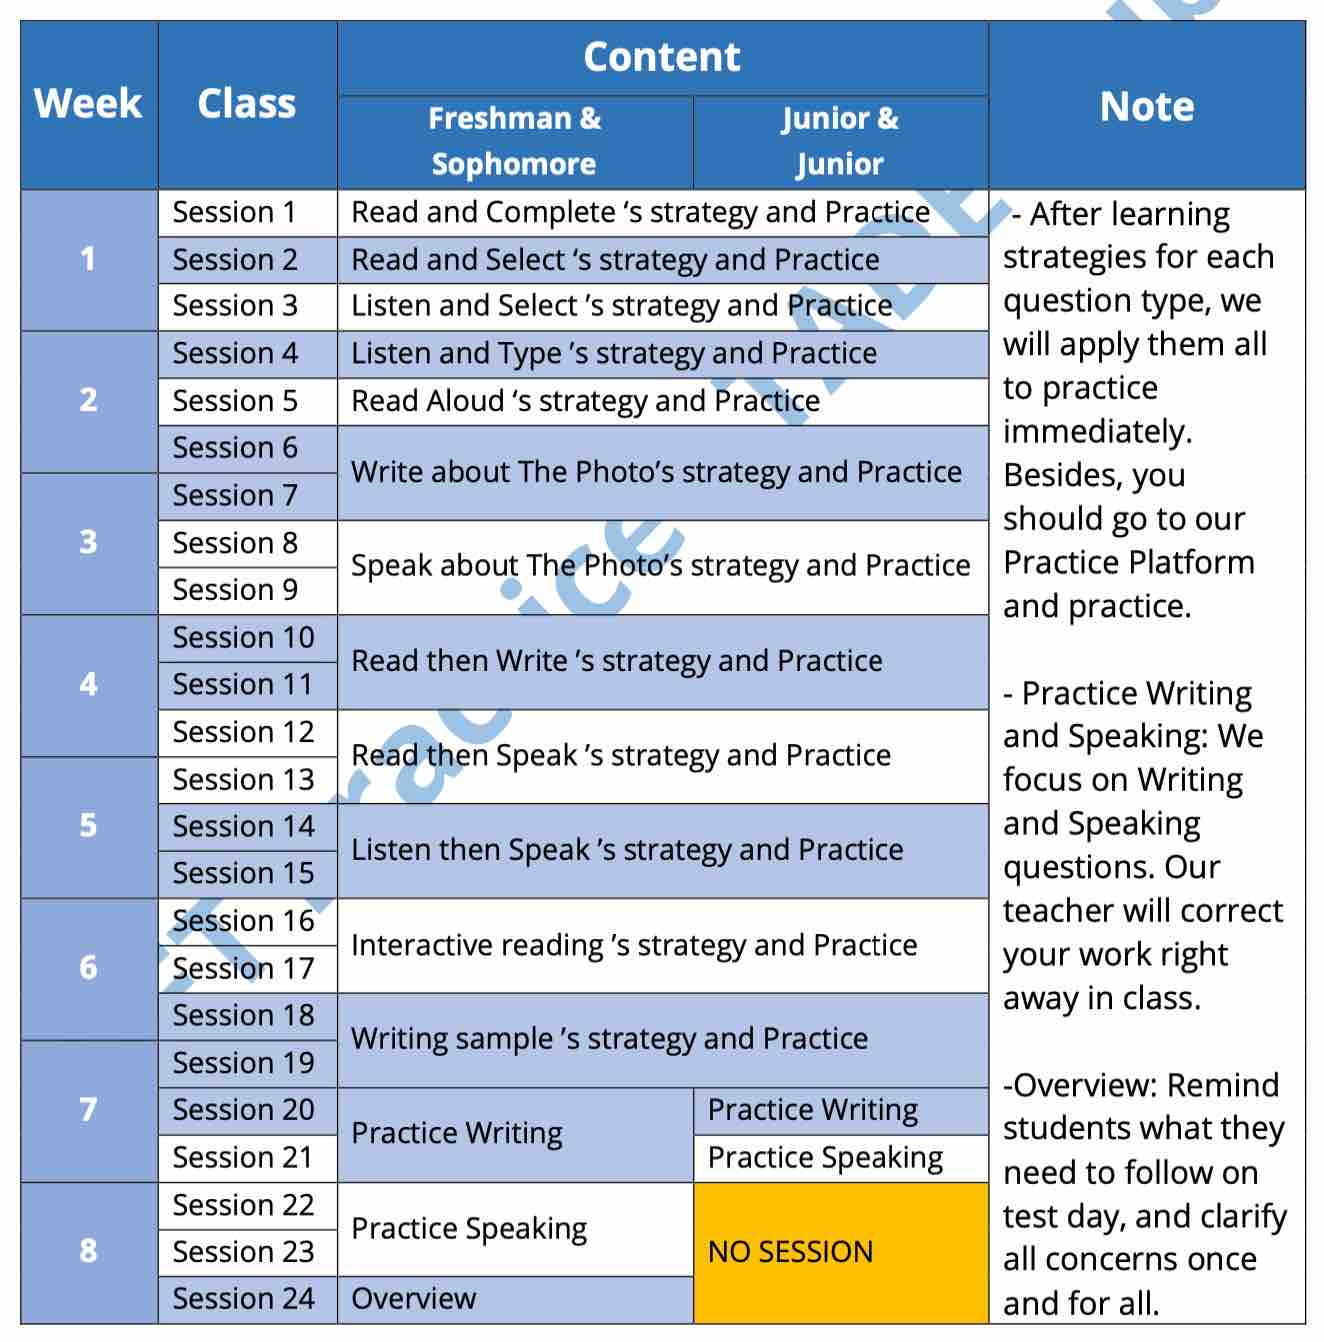 content training schedule, det practice platform, Duolingo Test preparation, training schedule